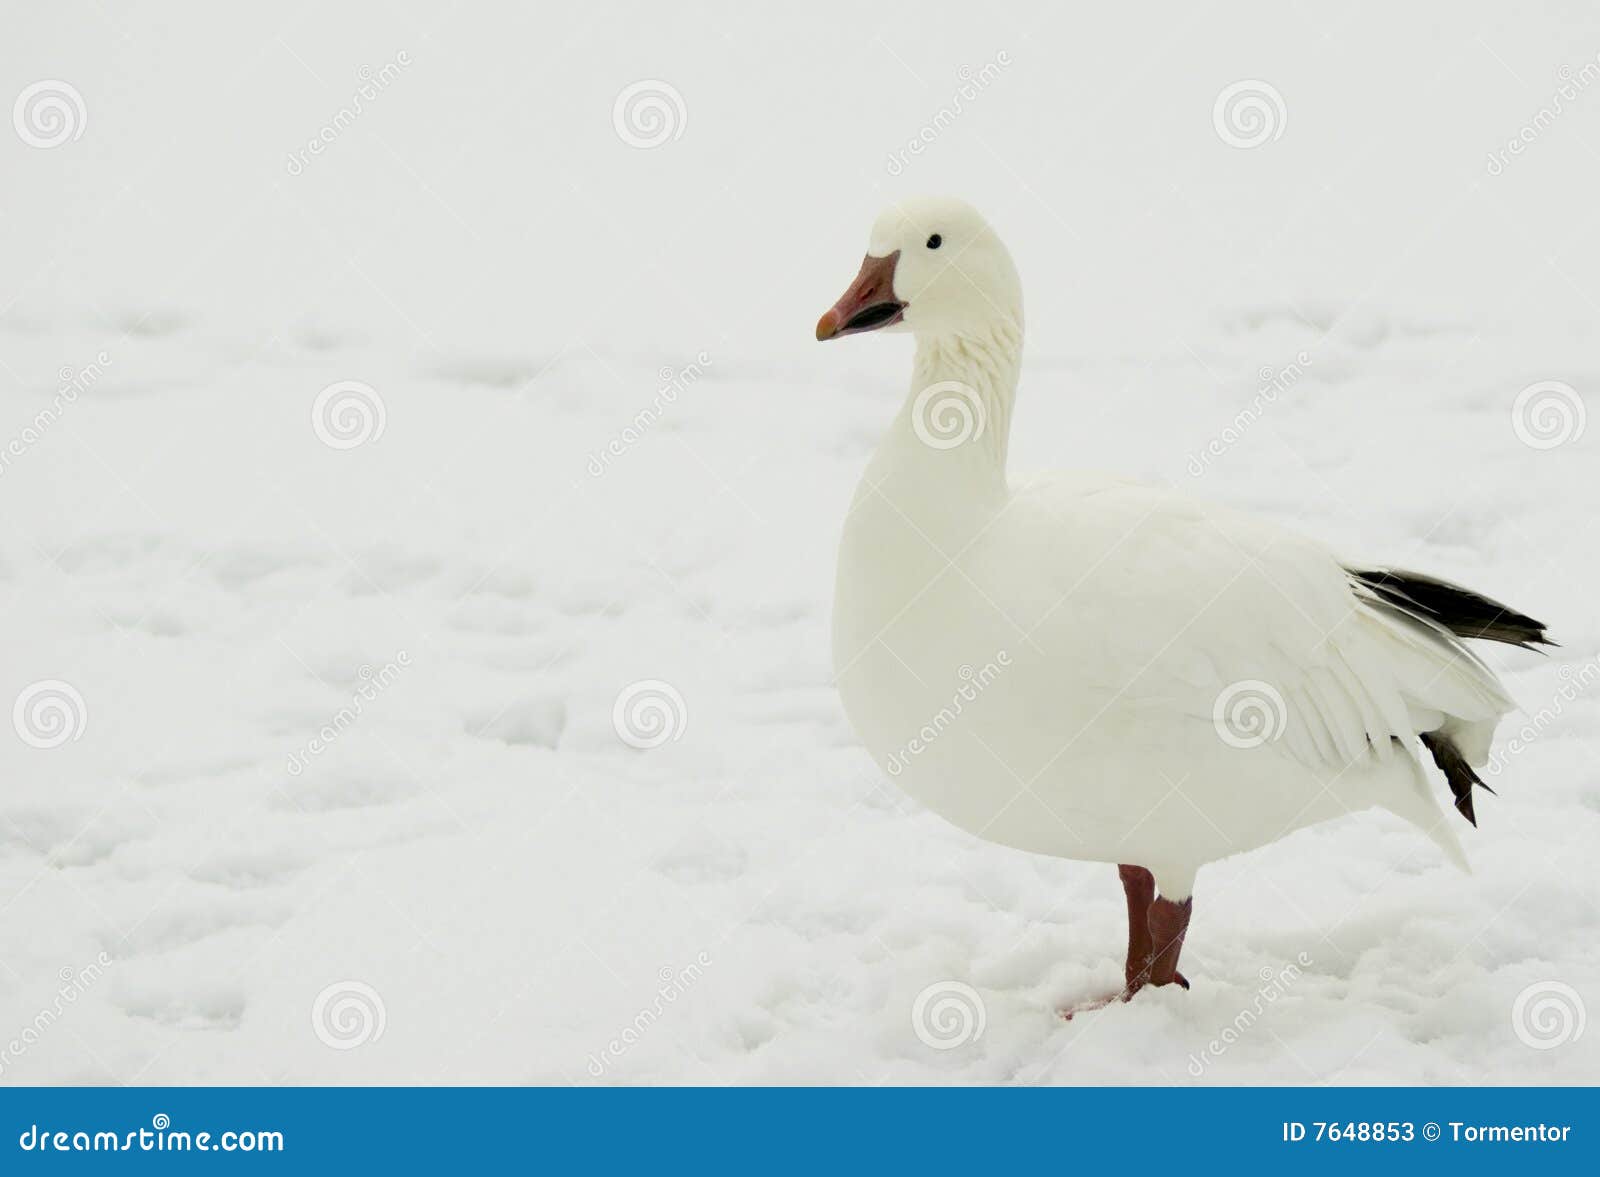 a snow goose (chen caerulescens)